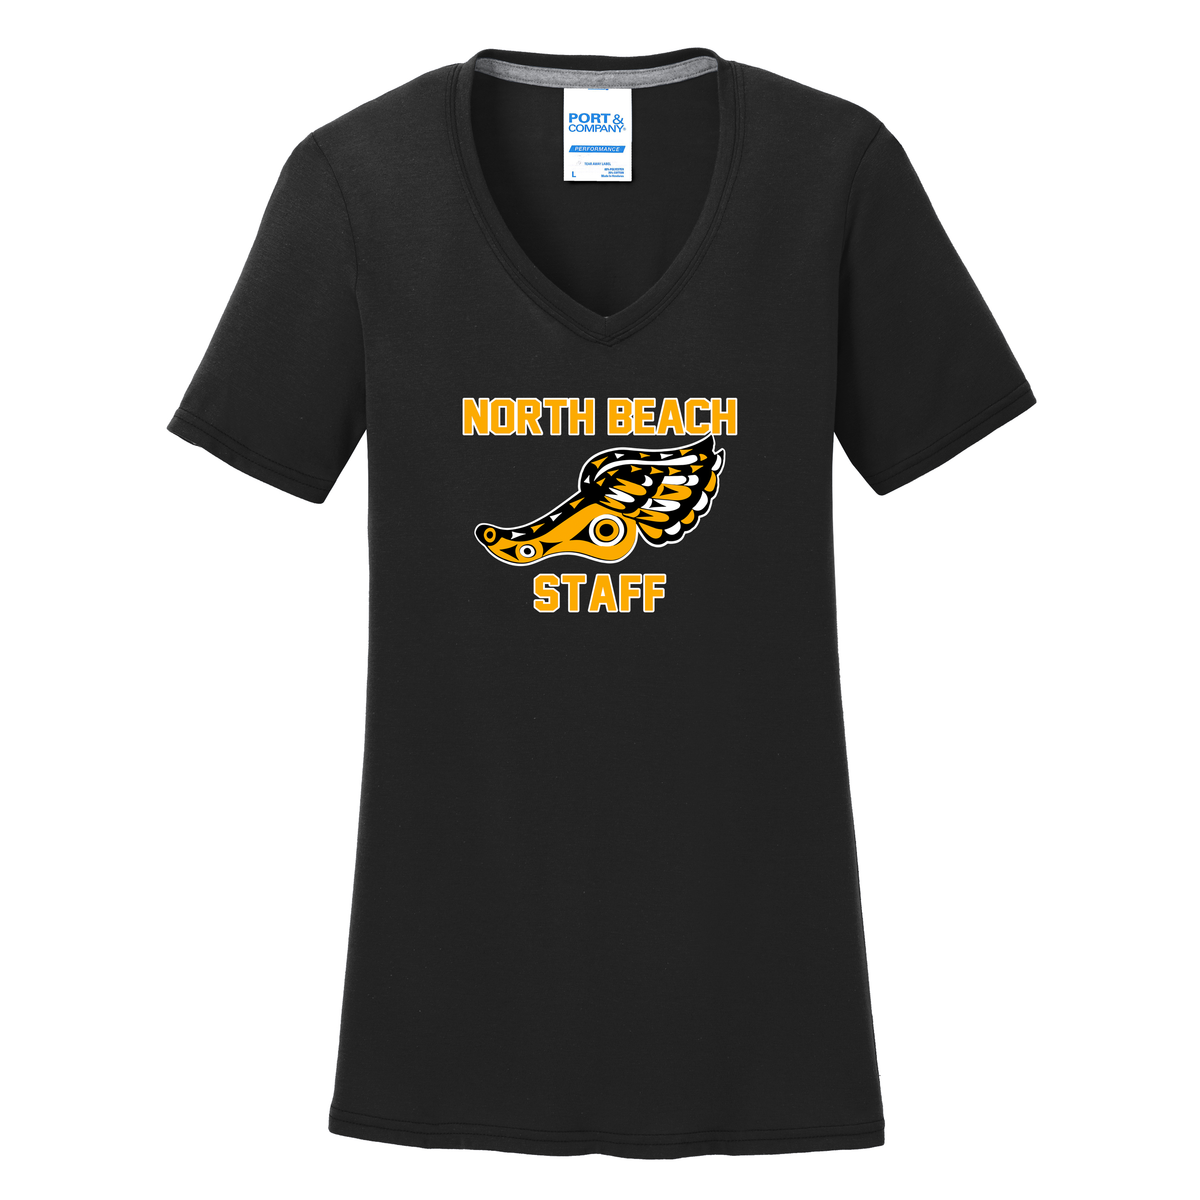 North Beach Staff Women's T-Shirt